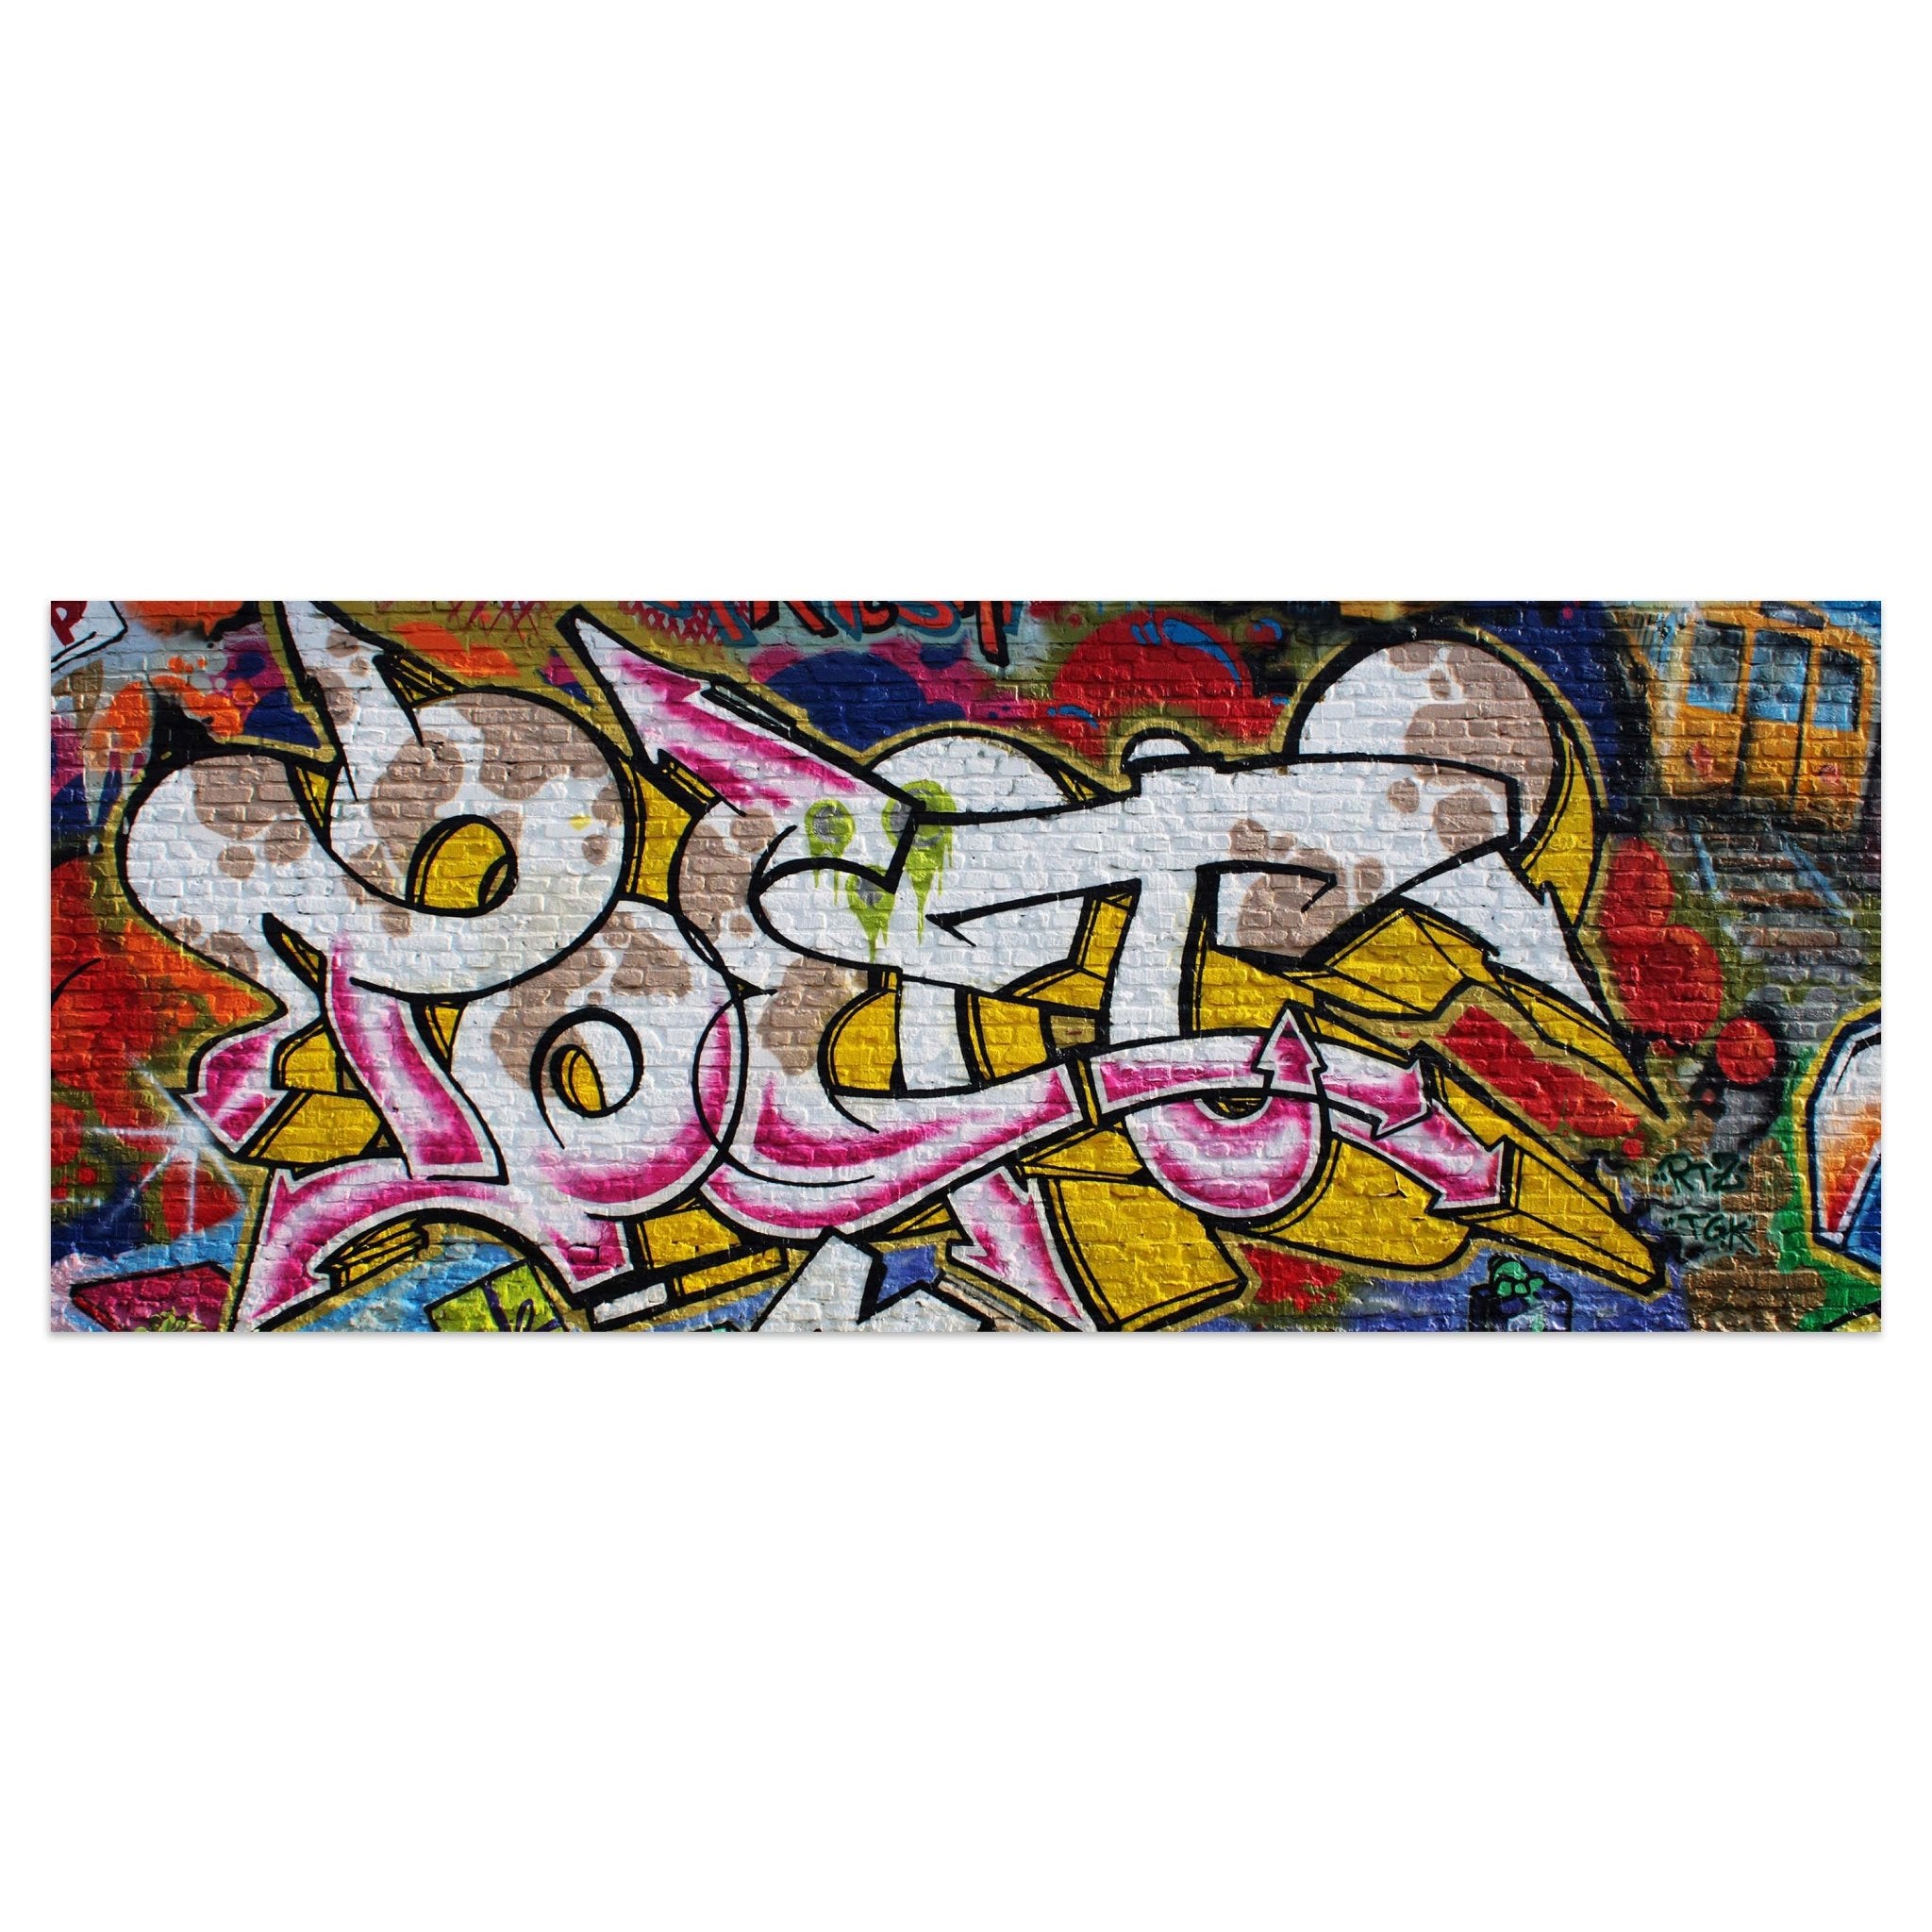 Leinwandbild Graffiti Poet M0007 kaufen - Bild 1